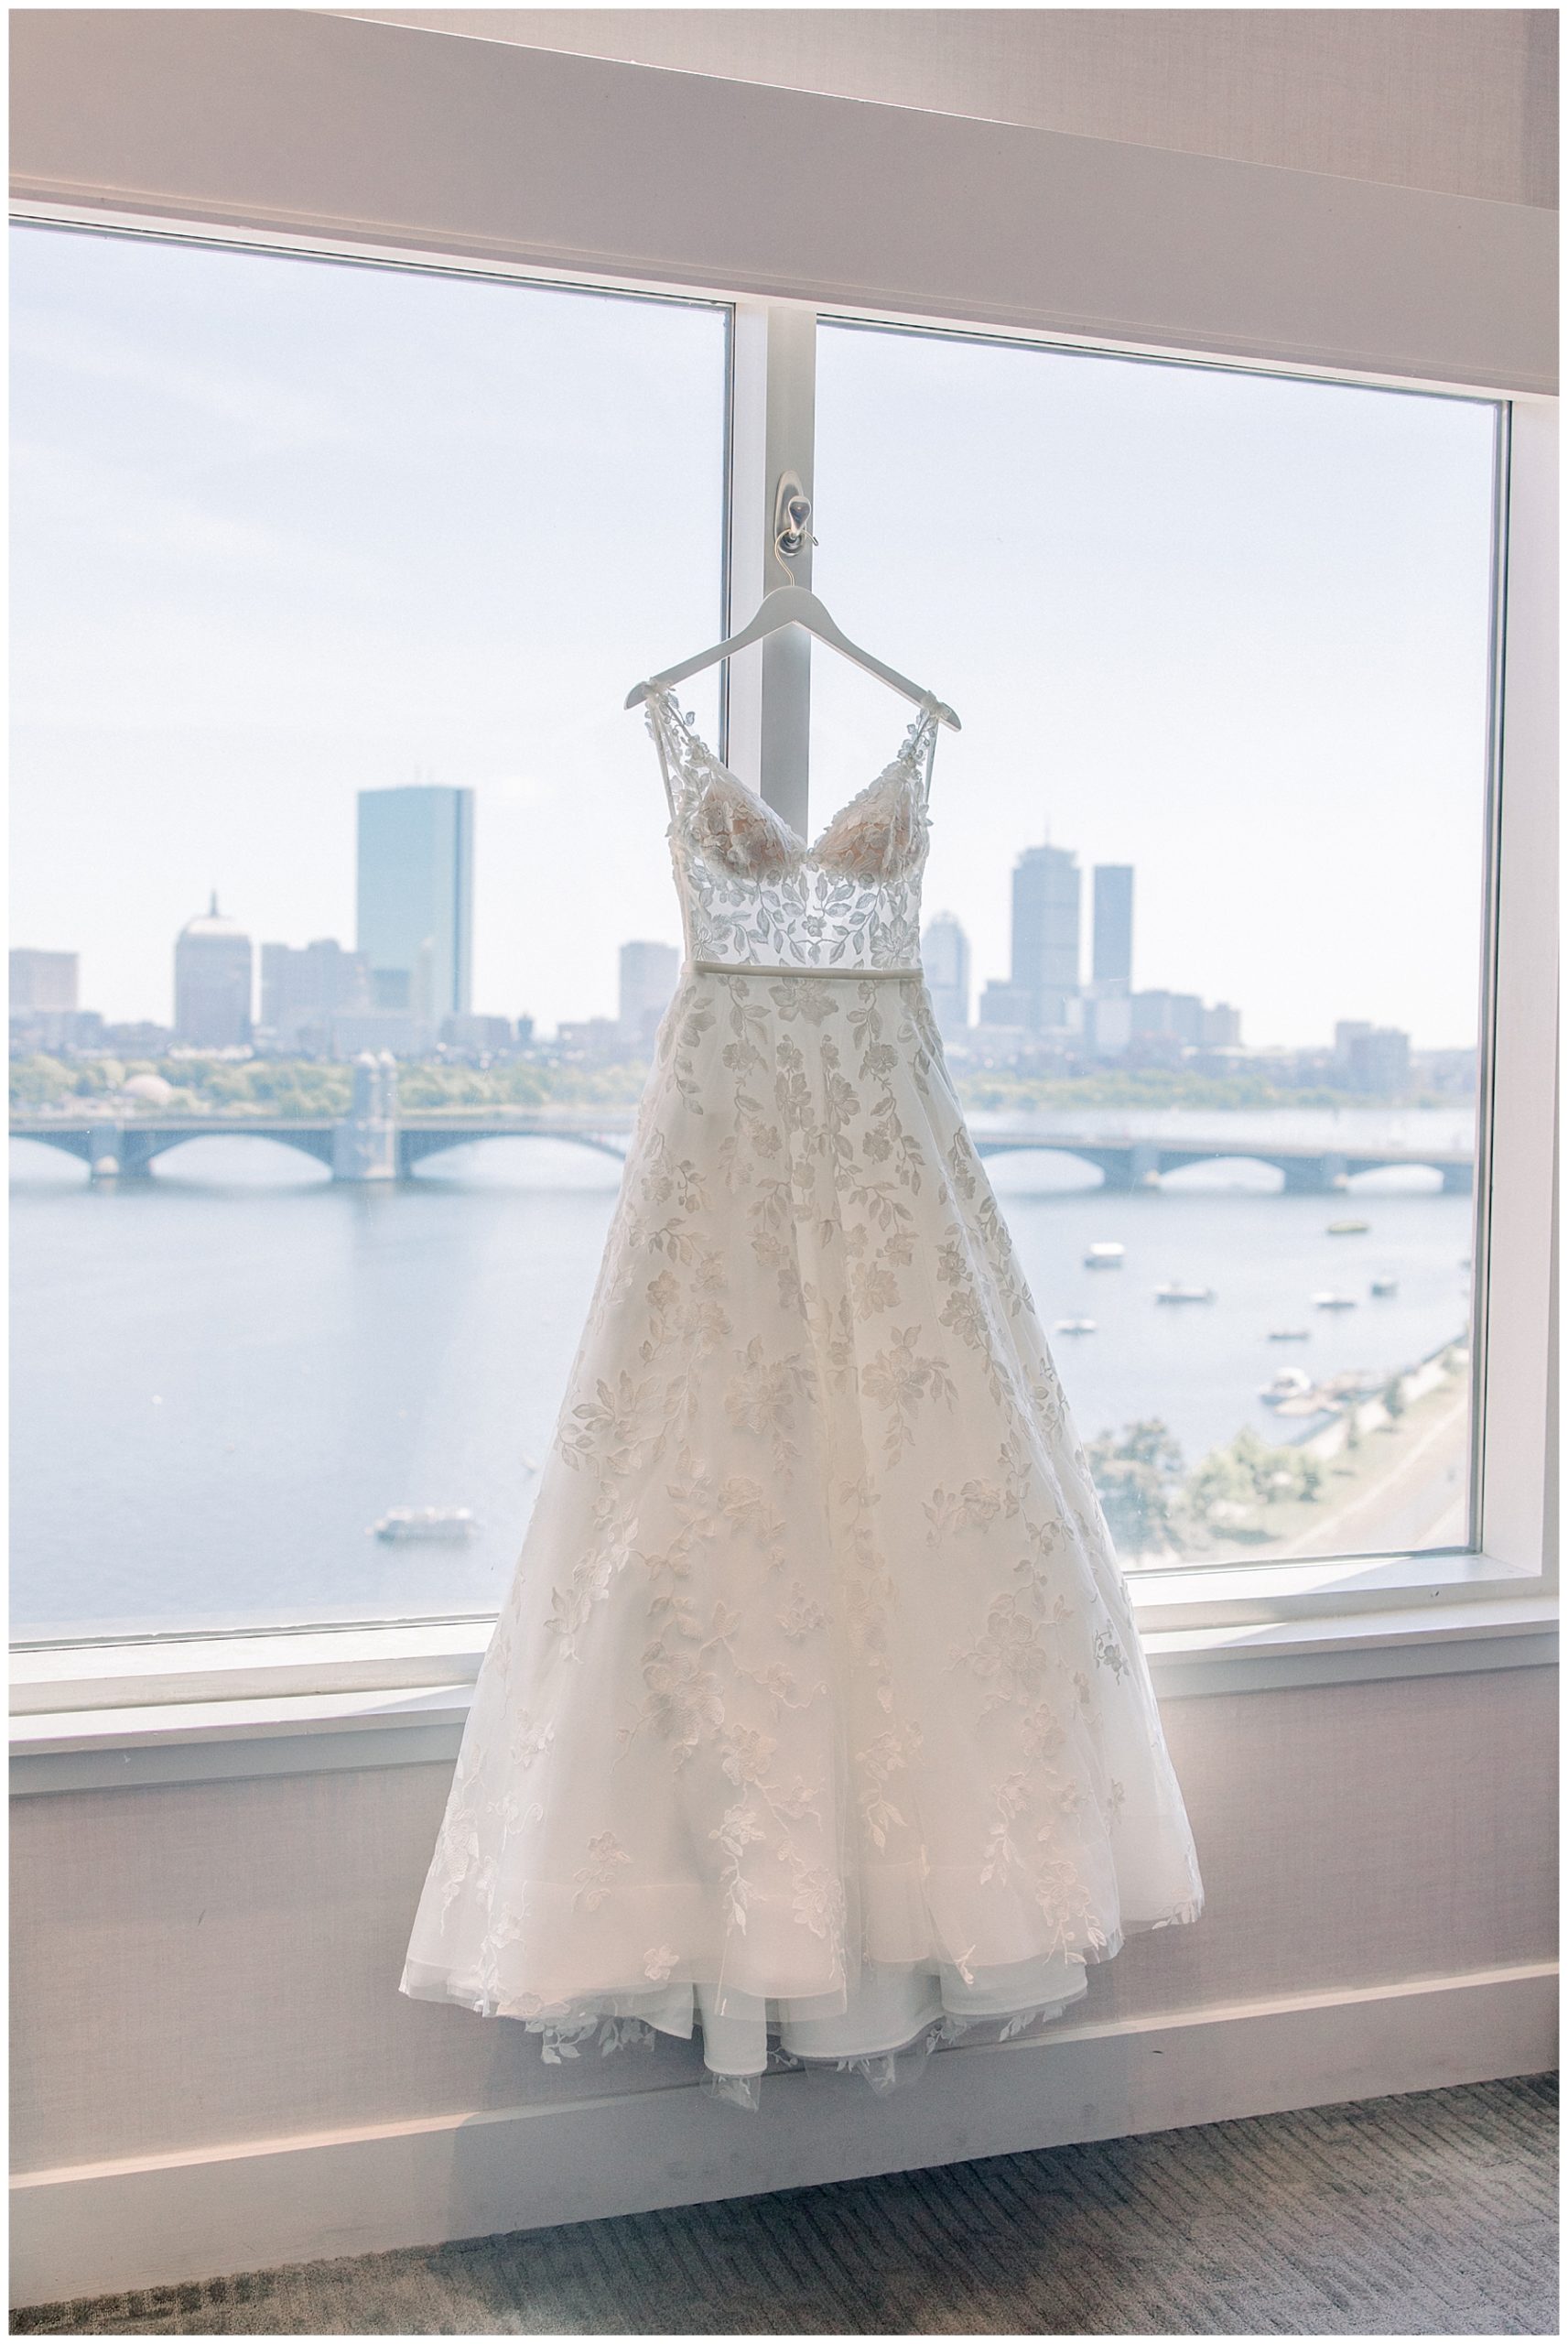 wedding dress hanging by window featuring Boston skyline